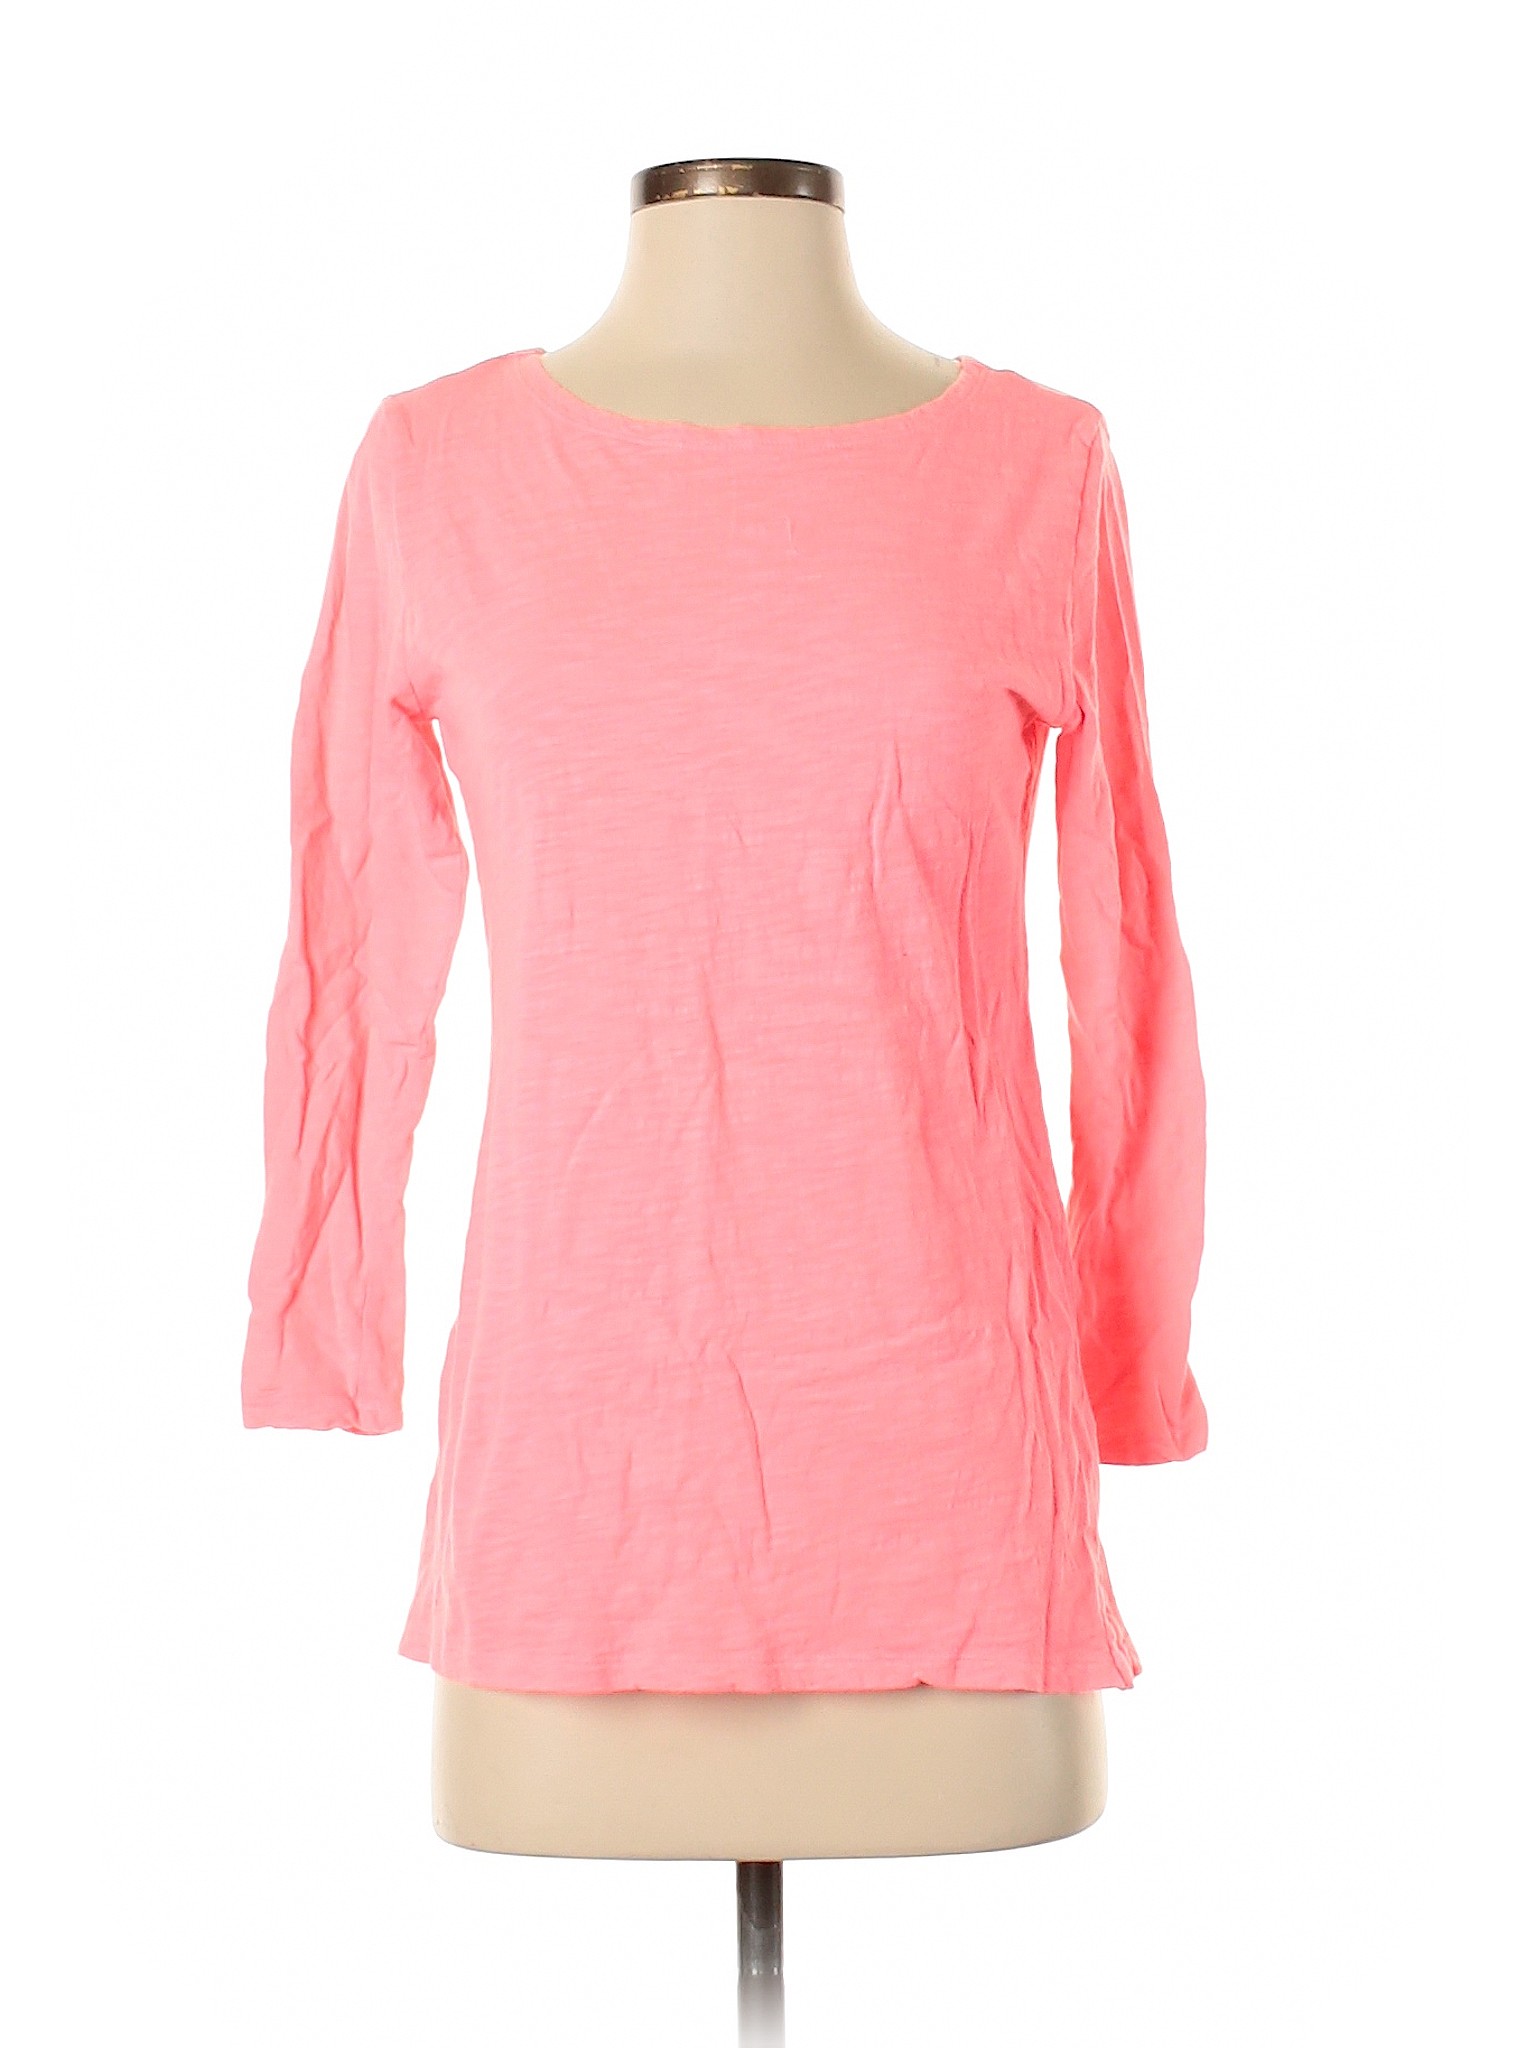 Old Navy Women Pink 3/4 Sleeve T-Shirt XS | eBay